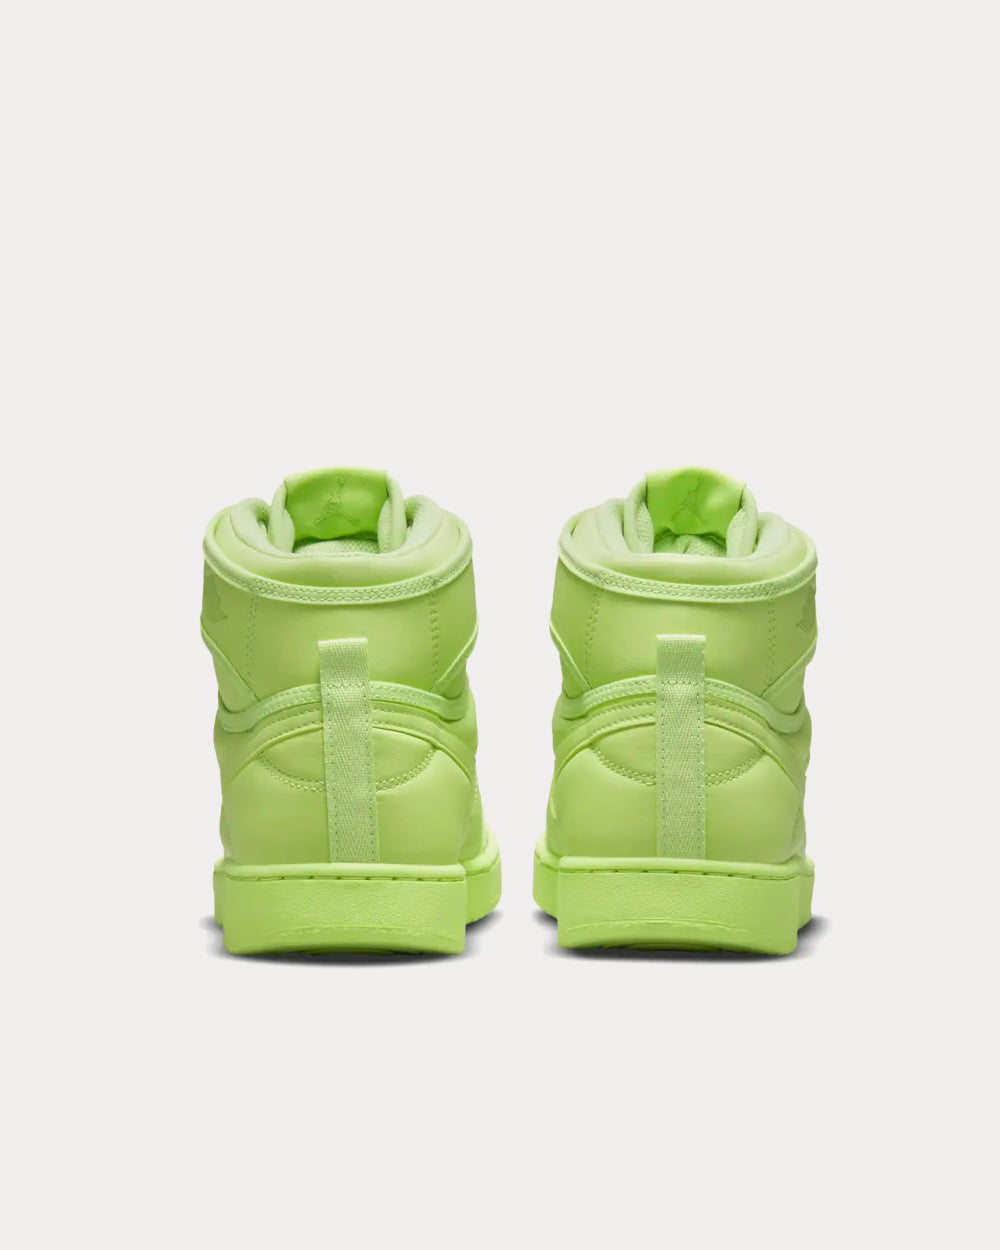 Nike x Billie Eilish - AJKO 1 Ghost Green High Top Sneakers